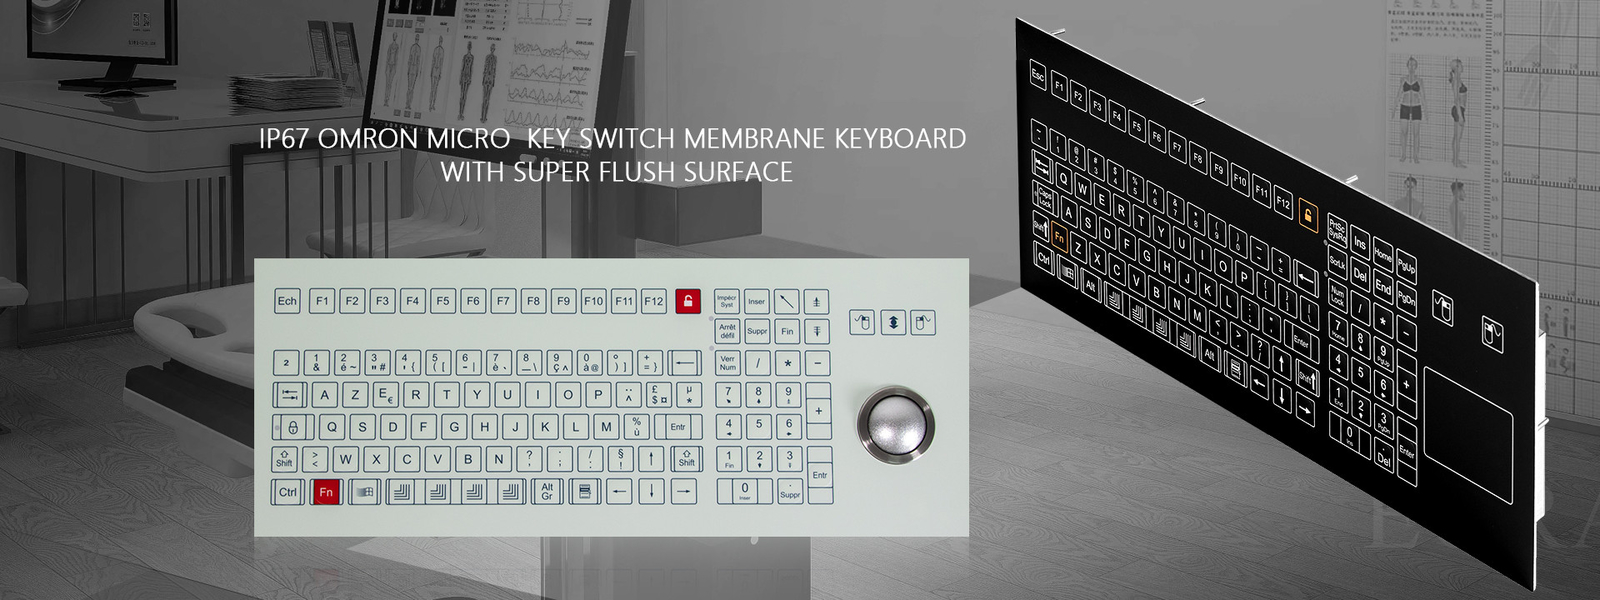 Backlit USB Keyboard